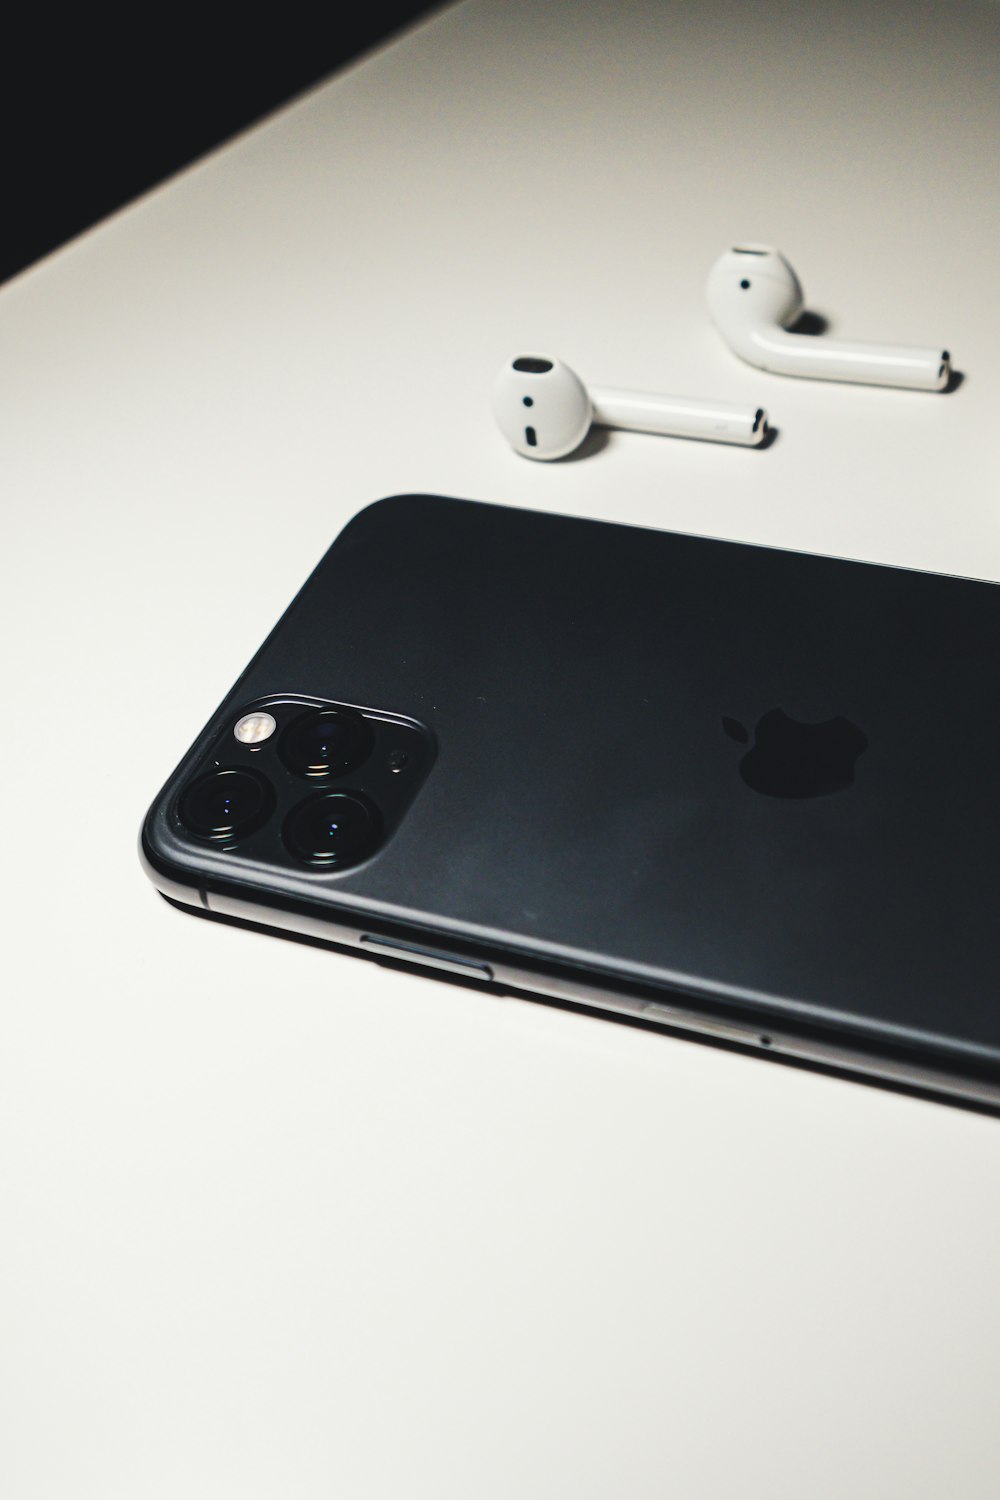 rygrad Galaxy Konklusion IPhone 11 beside Apple AirPods photo – Free Phone Image on Unsplash